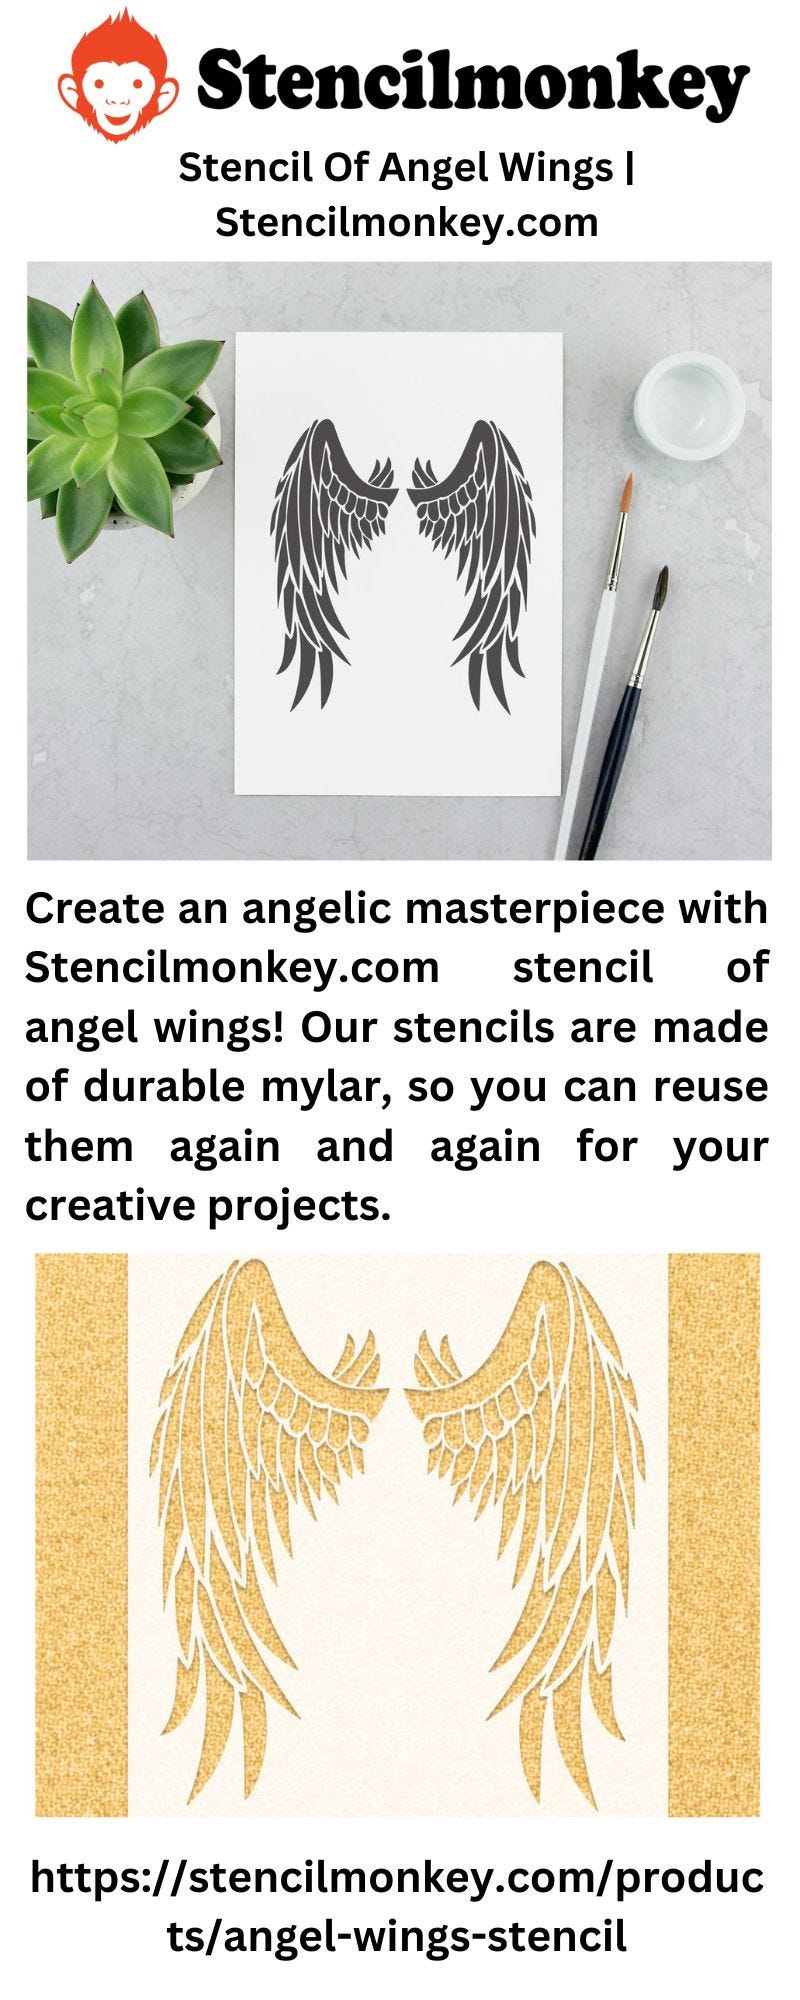 Stencil Of Angel Wings  Stencilmonkey.com - stencilmonkey - Medium